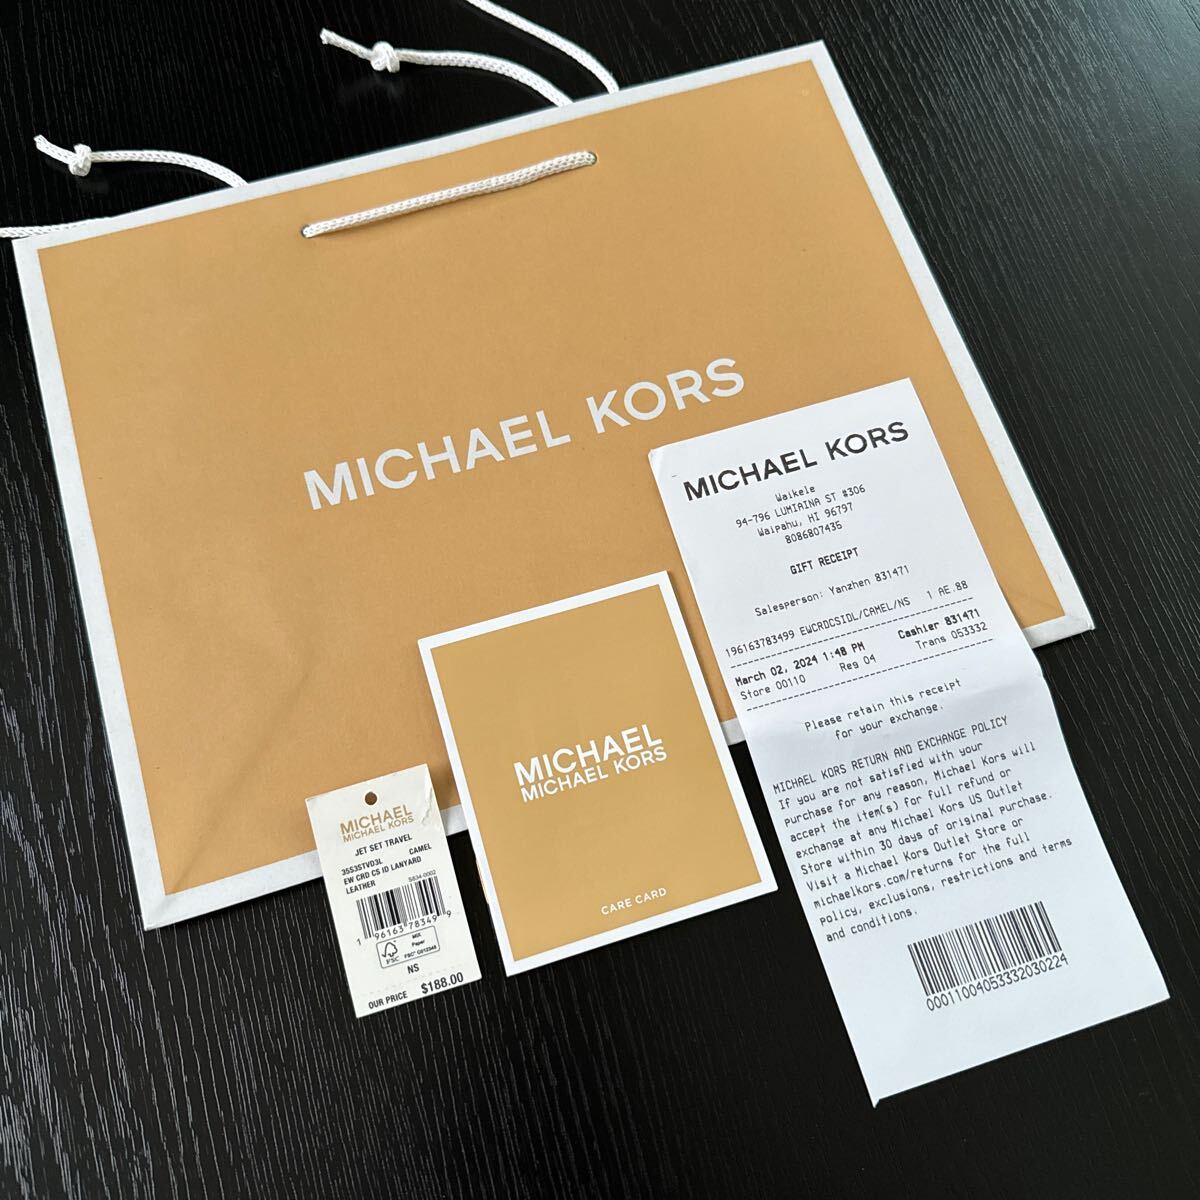  Michael Kors MICHAEL KORS ID футляр для карточек 35S3STVD3L чехол для пропуска ID карта держатель ID держатель чехол для проездного билета женский кожа бежевый 